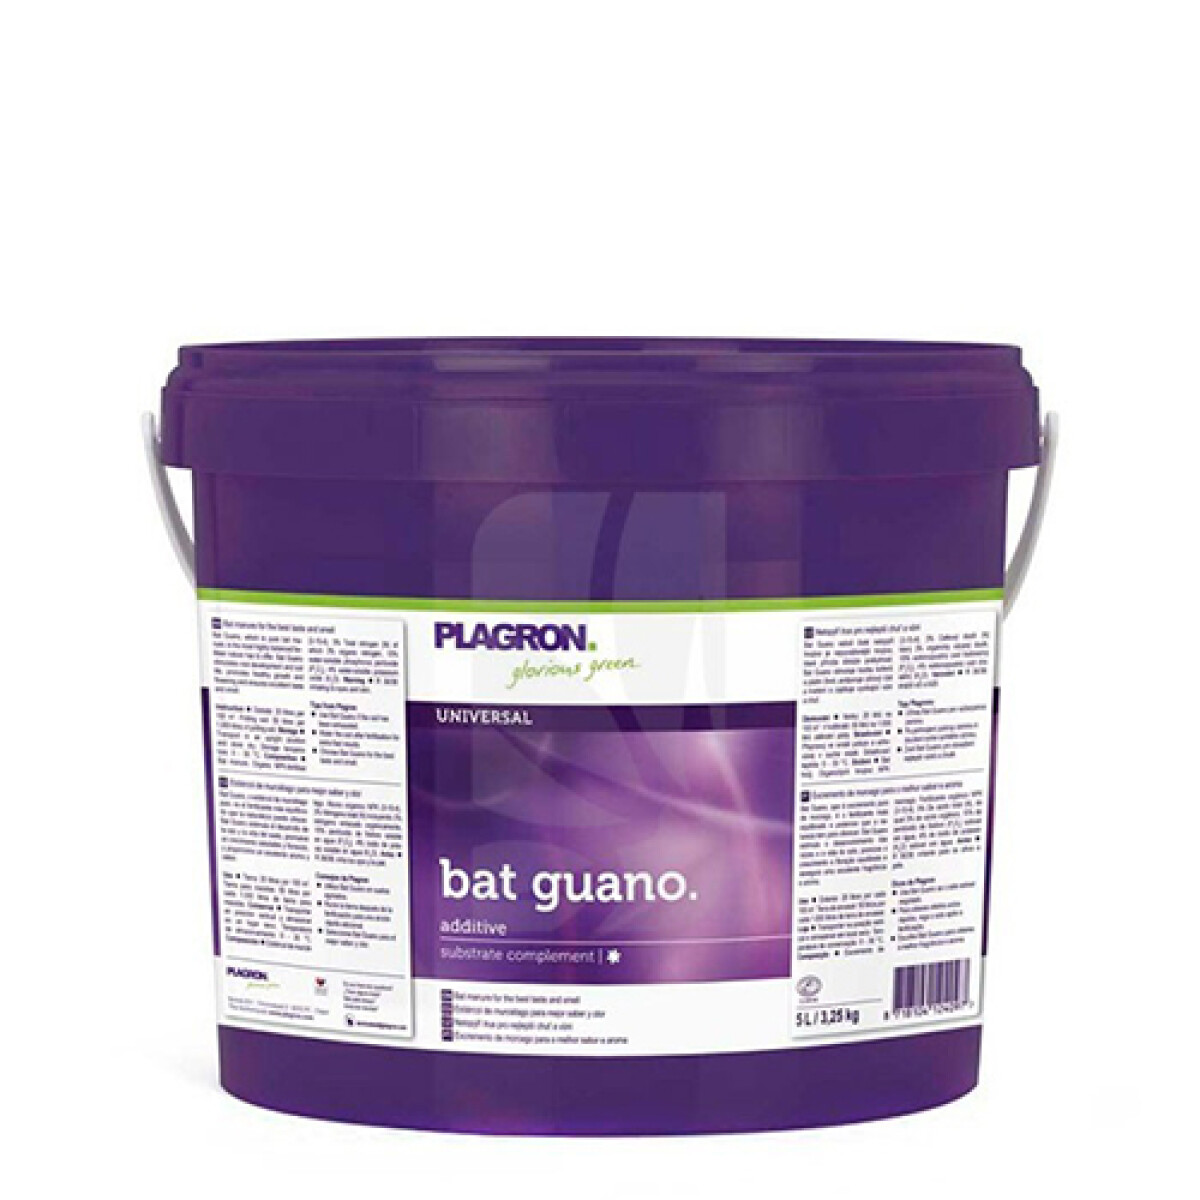 BAT GUANO PLAGRON - 5L 